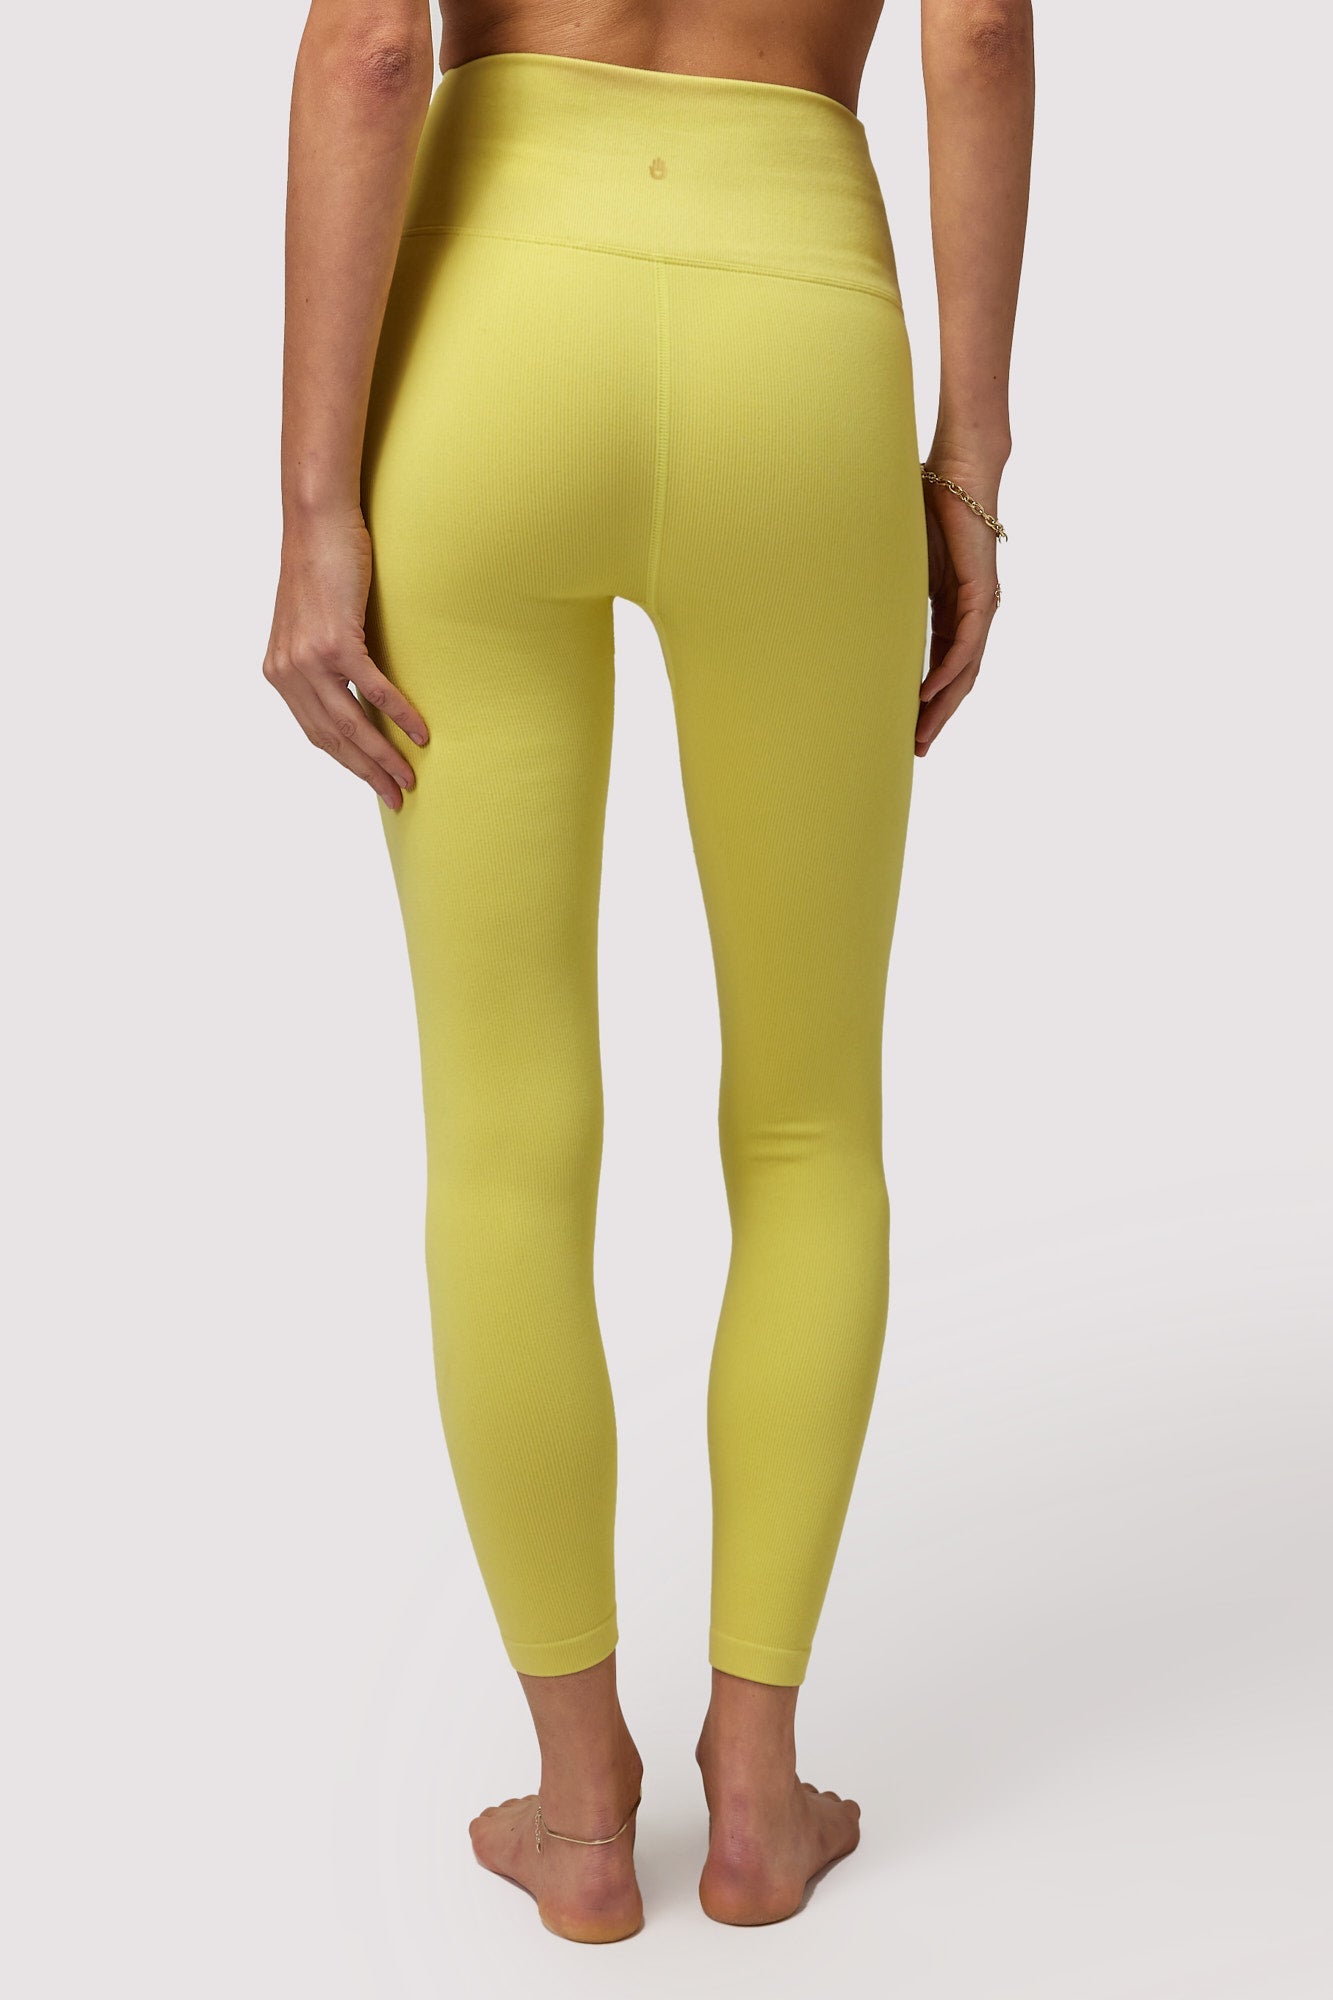 Lululemon align Faded Zap(neon yellow) leggings 28... - Depop